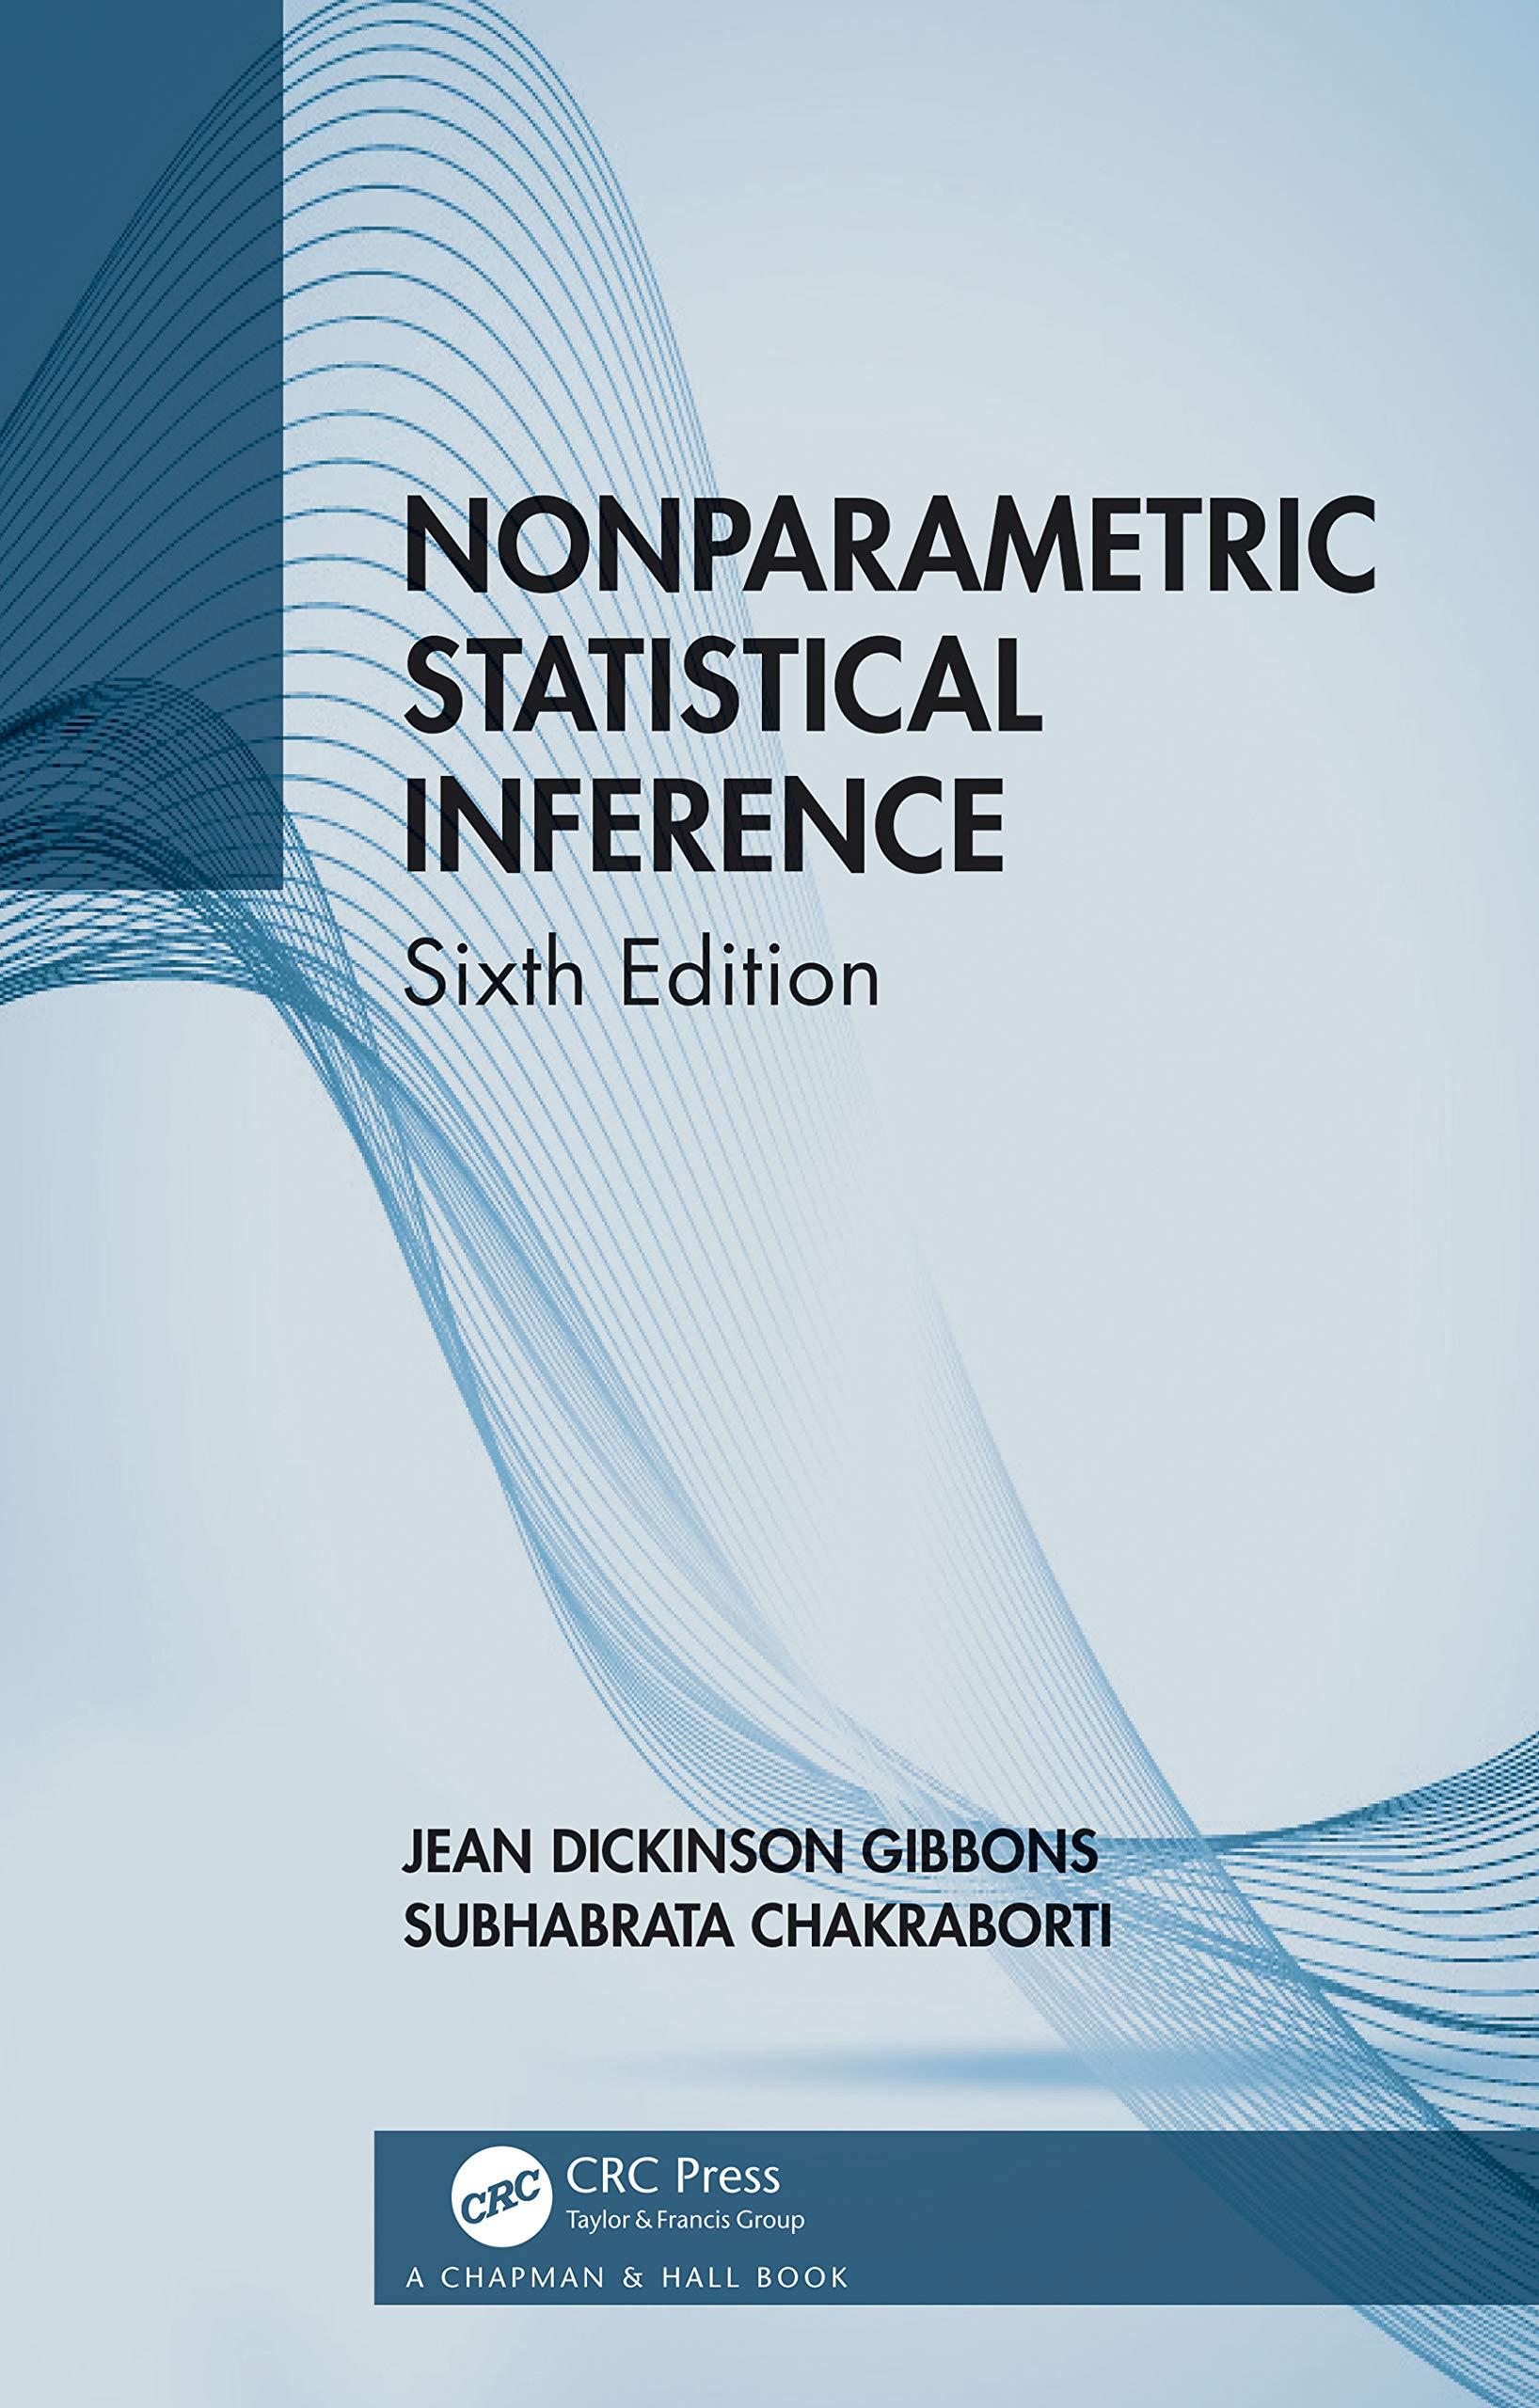 nonparametric statistical inference 6th edition jean dickinson gibbons, subhabrata chakraborti 1138087440,